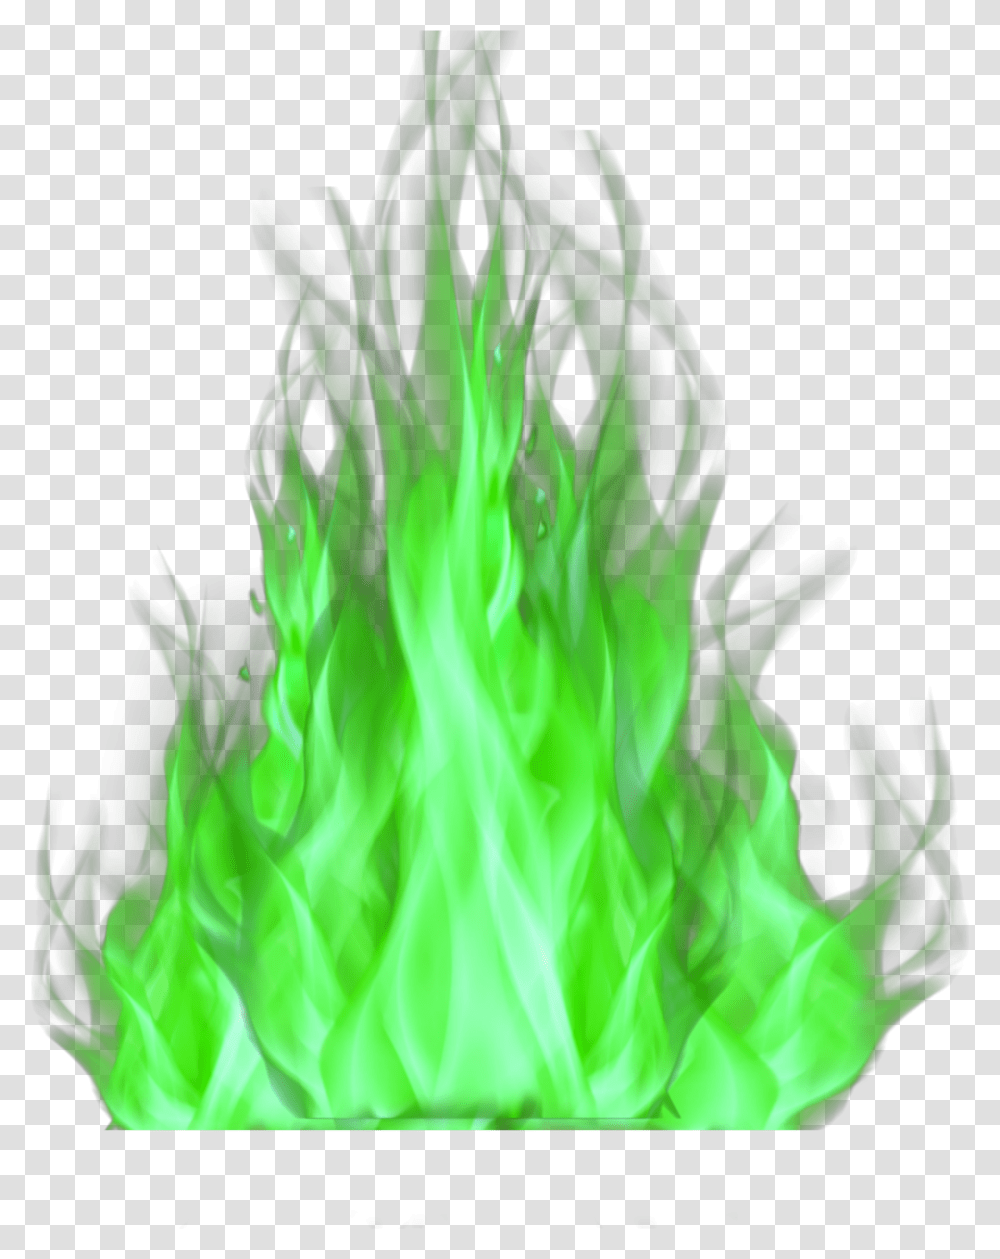 Flames Fire Fireandflames Greenfire Green Flame, Bonfire Transparent Png